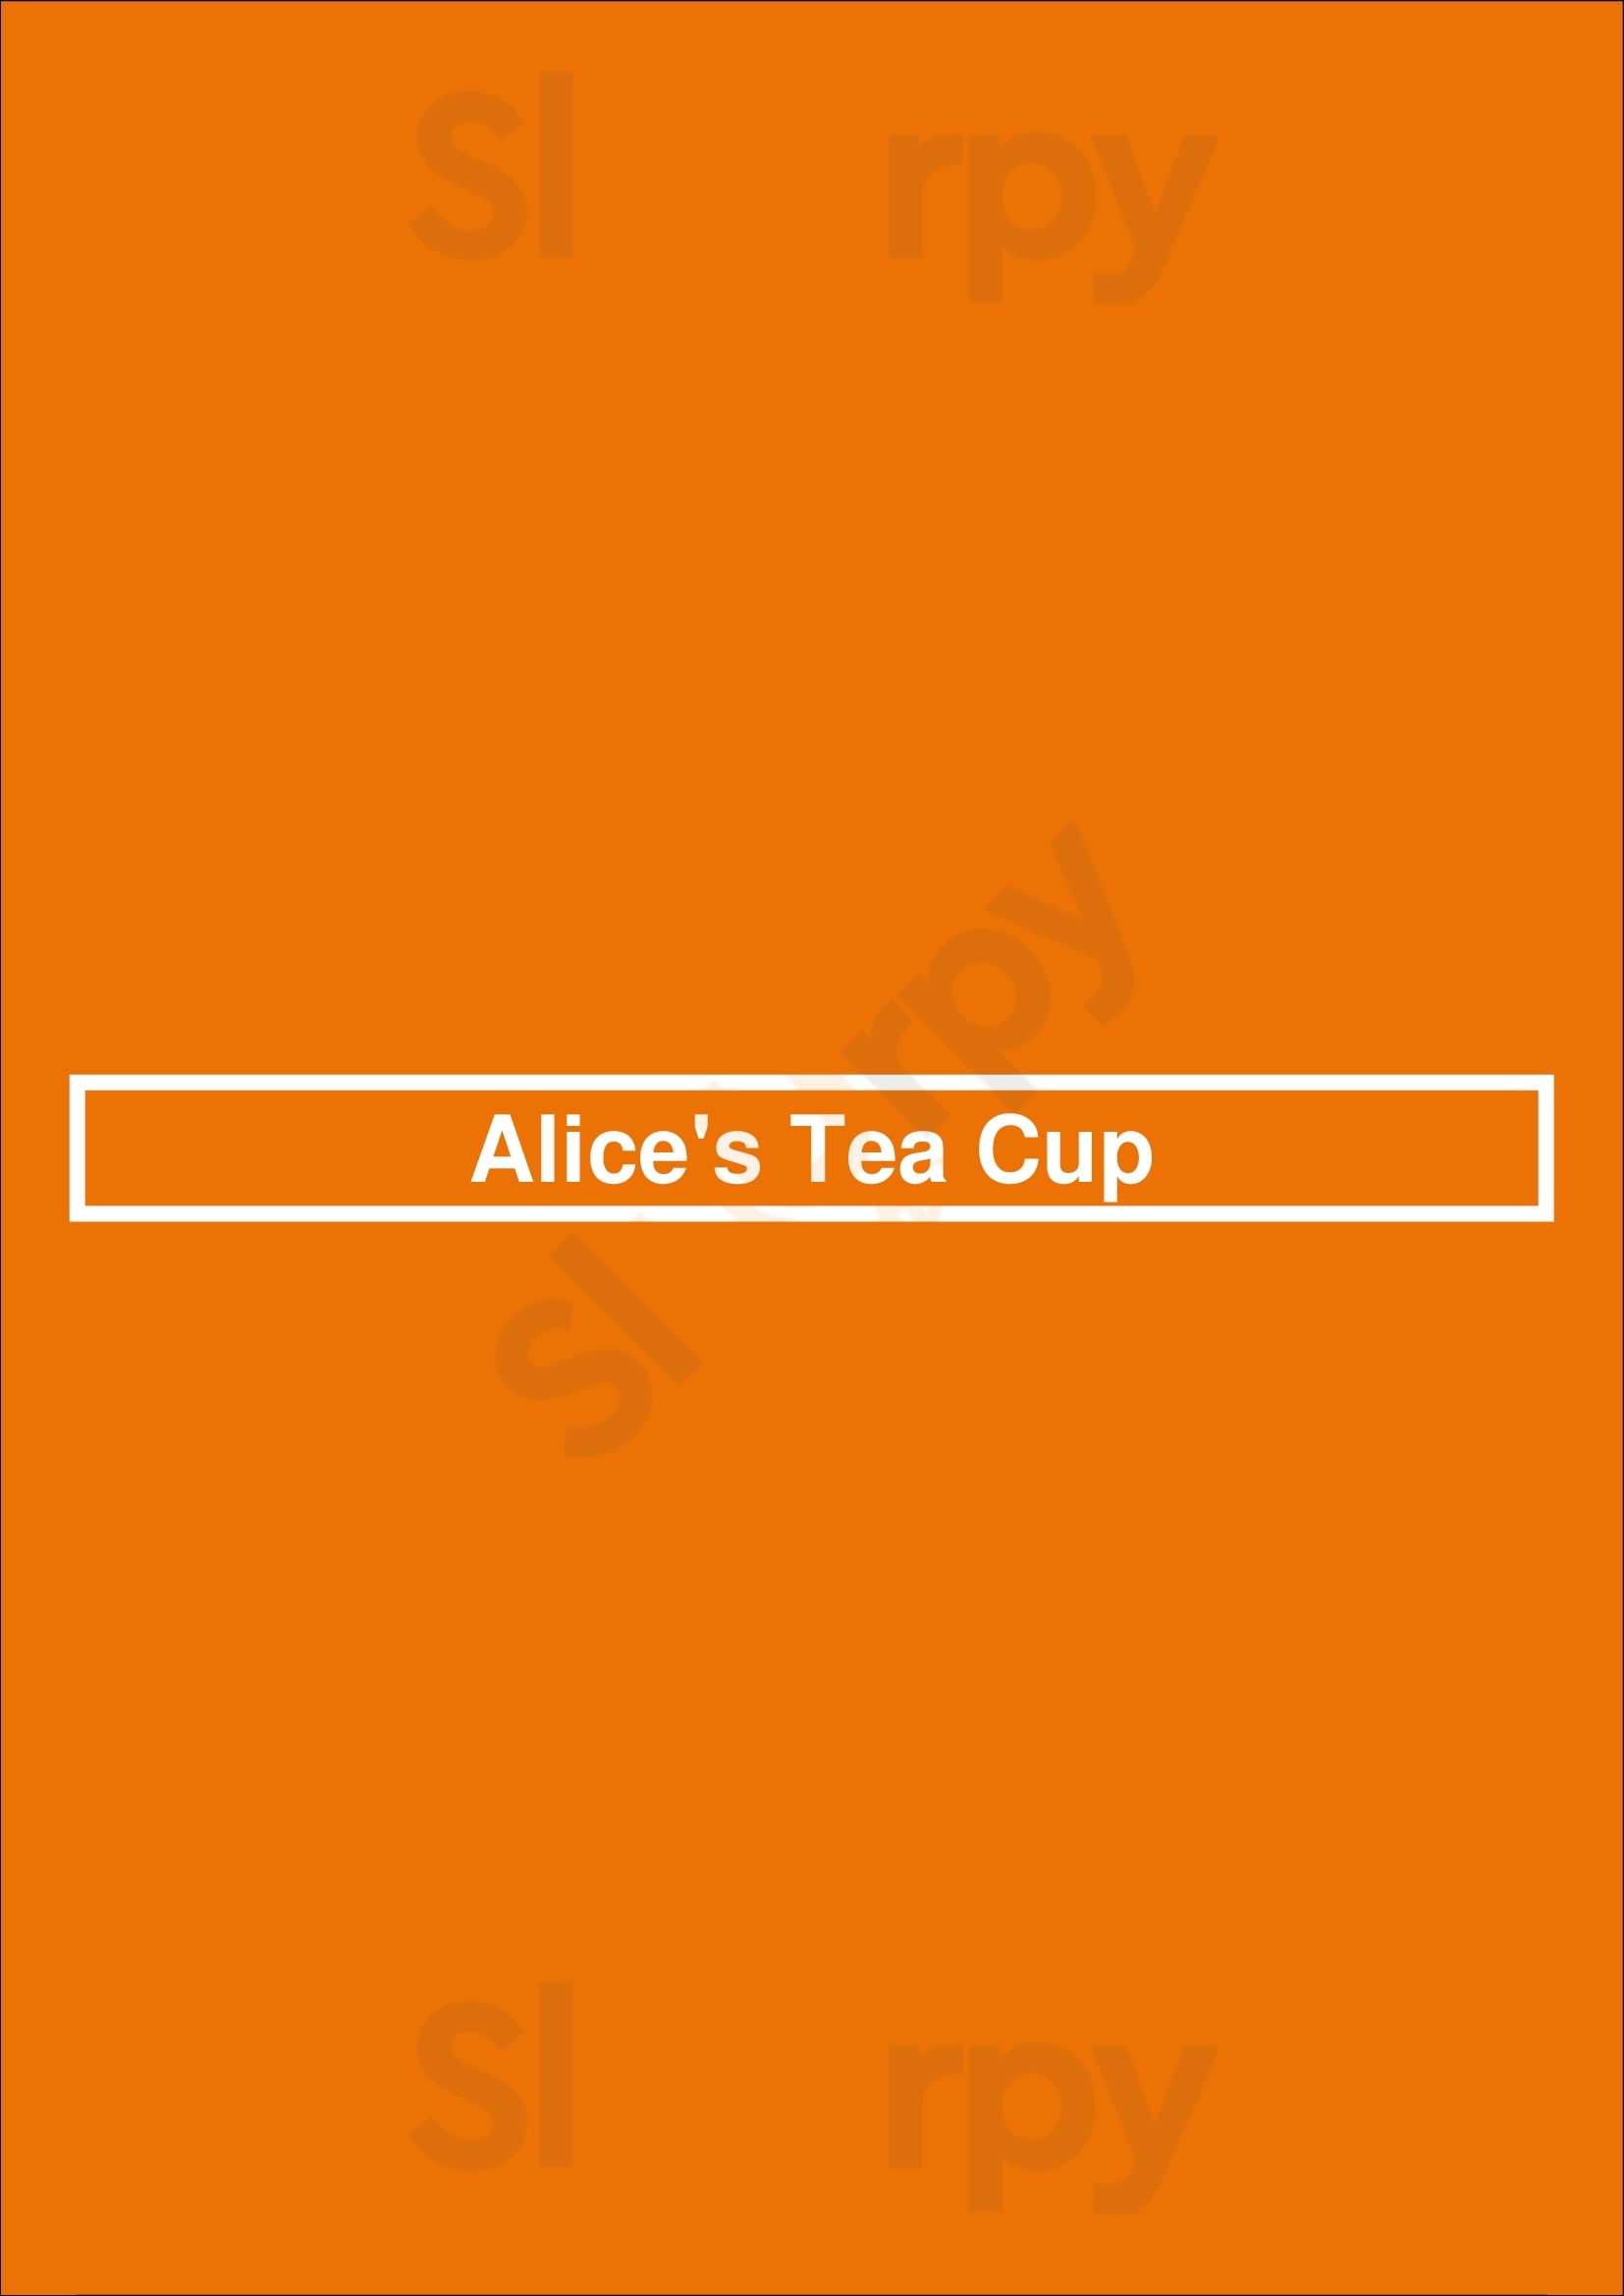 Alice's Tea Cup New York City Menu - 1